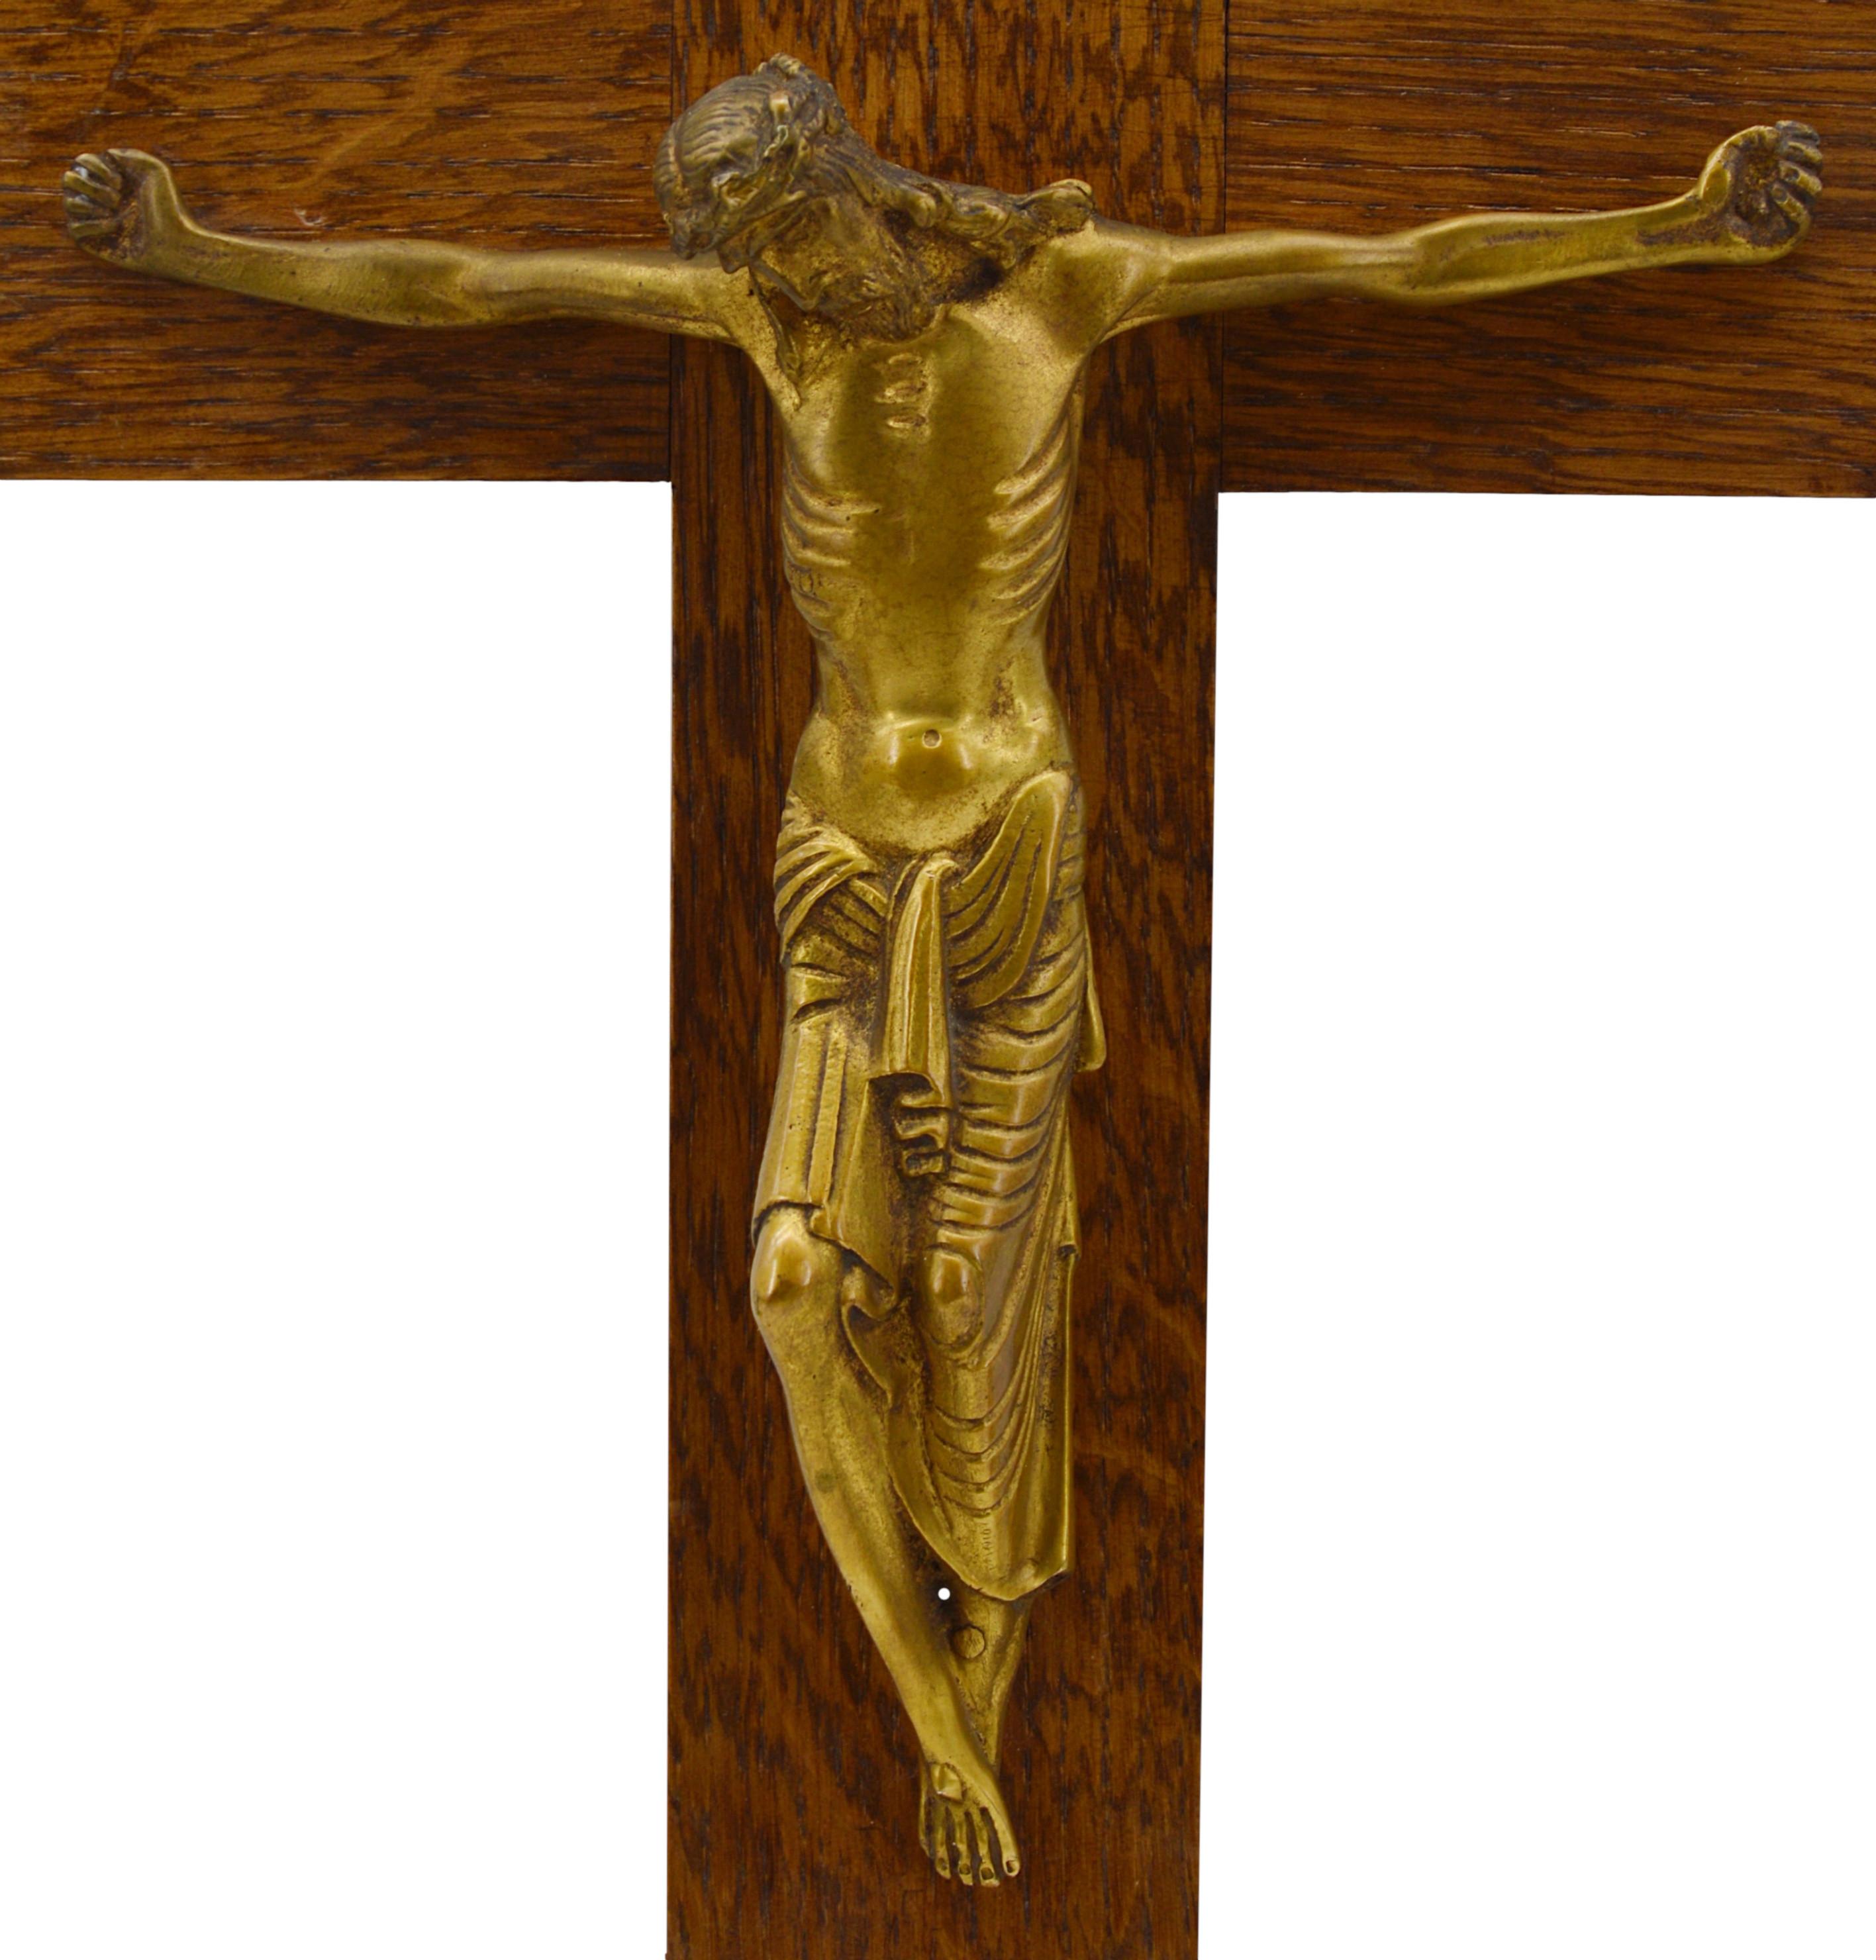 French Art Deco bronze & oak crucifix from the Sainte-Claire de Mur de Barrez monastery (Poor Clares, read below), France, ca.1930. Close to the work of Ateliers de Marolles. Height: 16.5